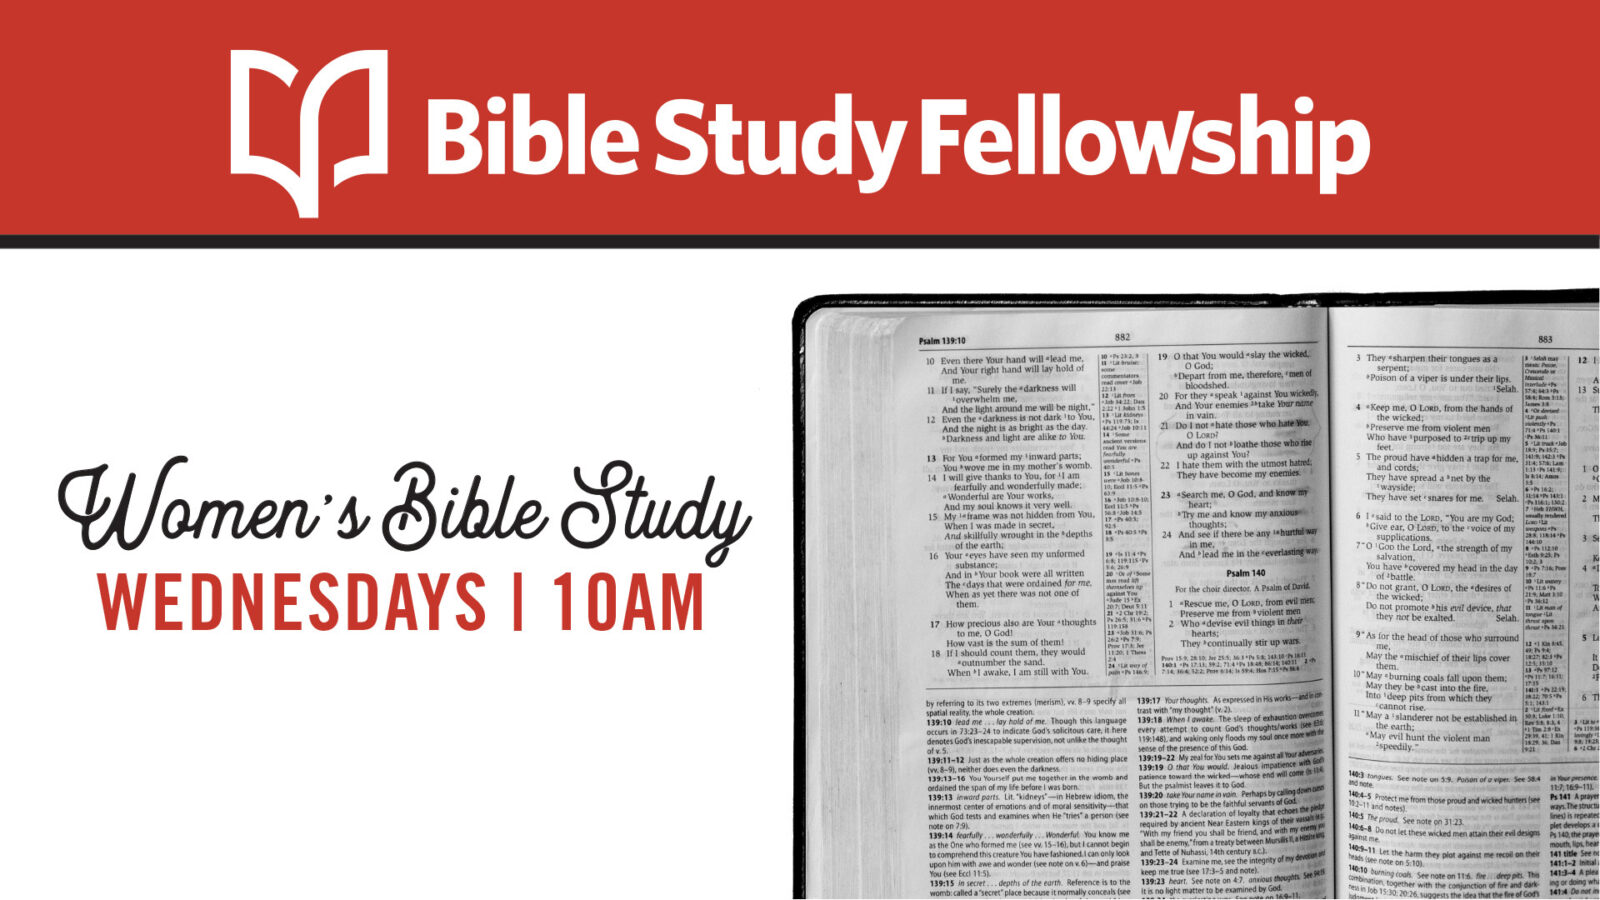 WOMEN’S DAYTIME BIBLE STUDY FELLOWSHIP (BSF)